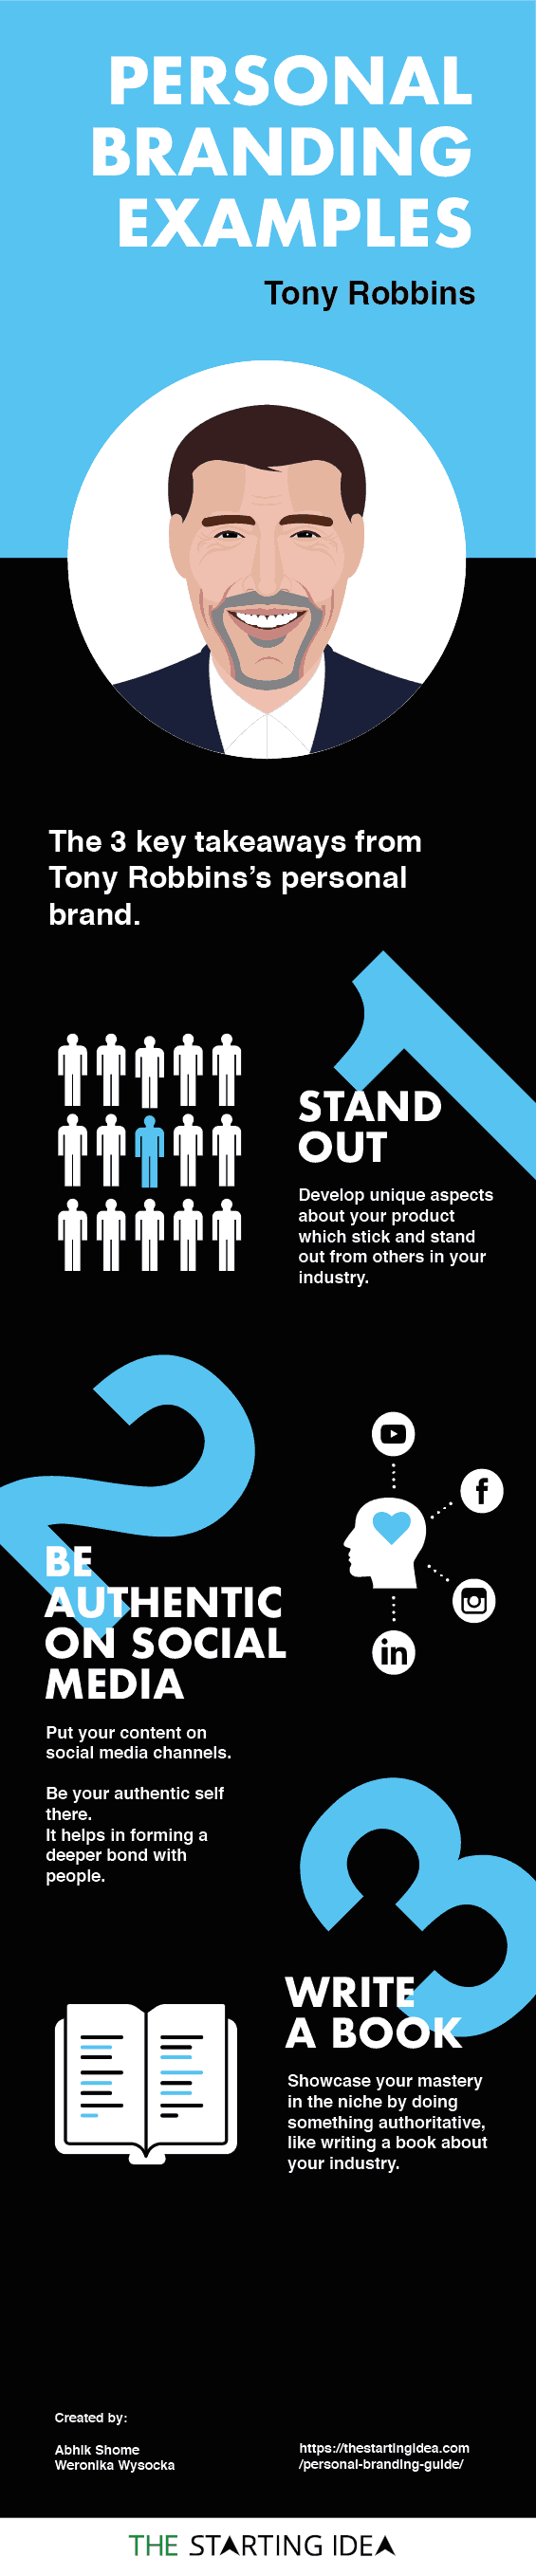 Tony Robbins personal branding examples infographic